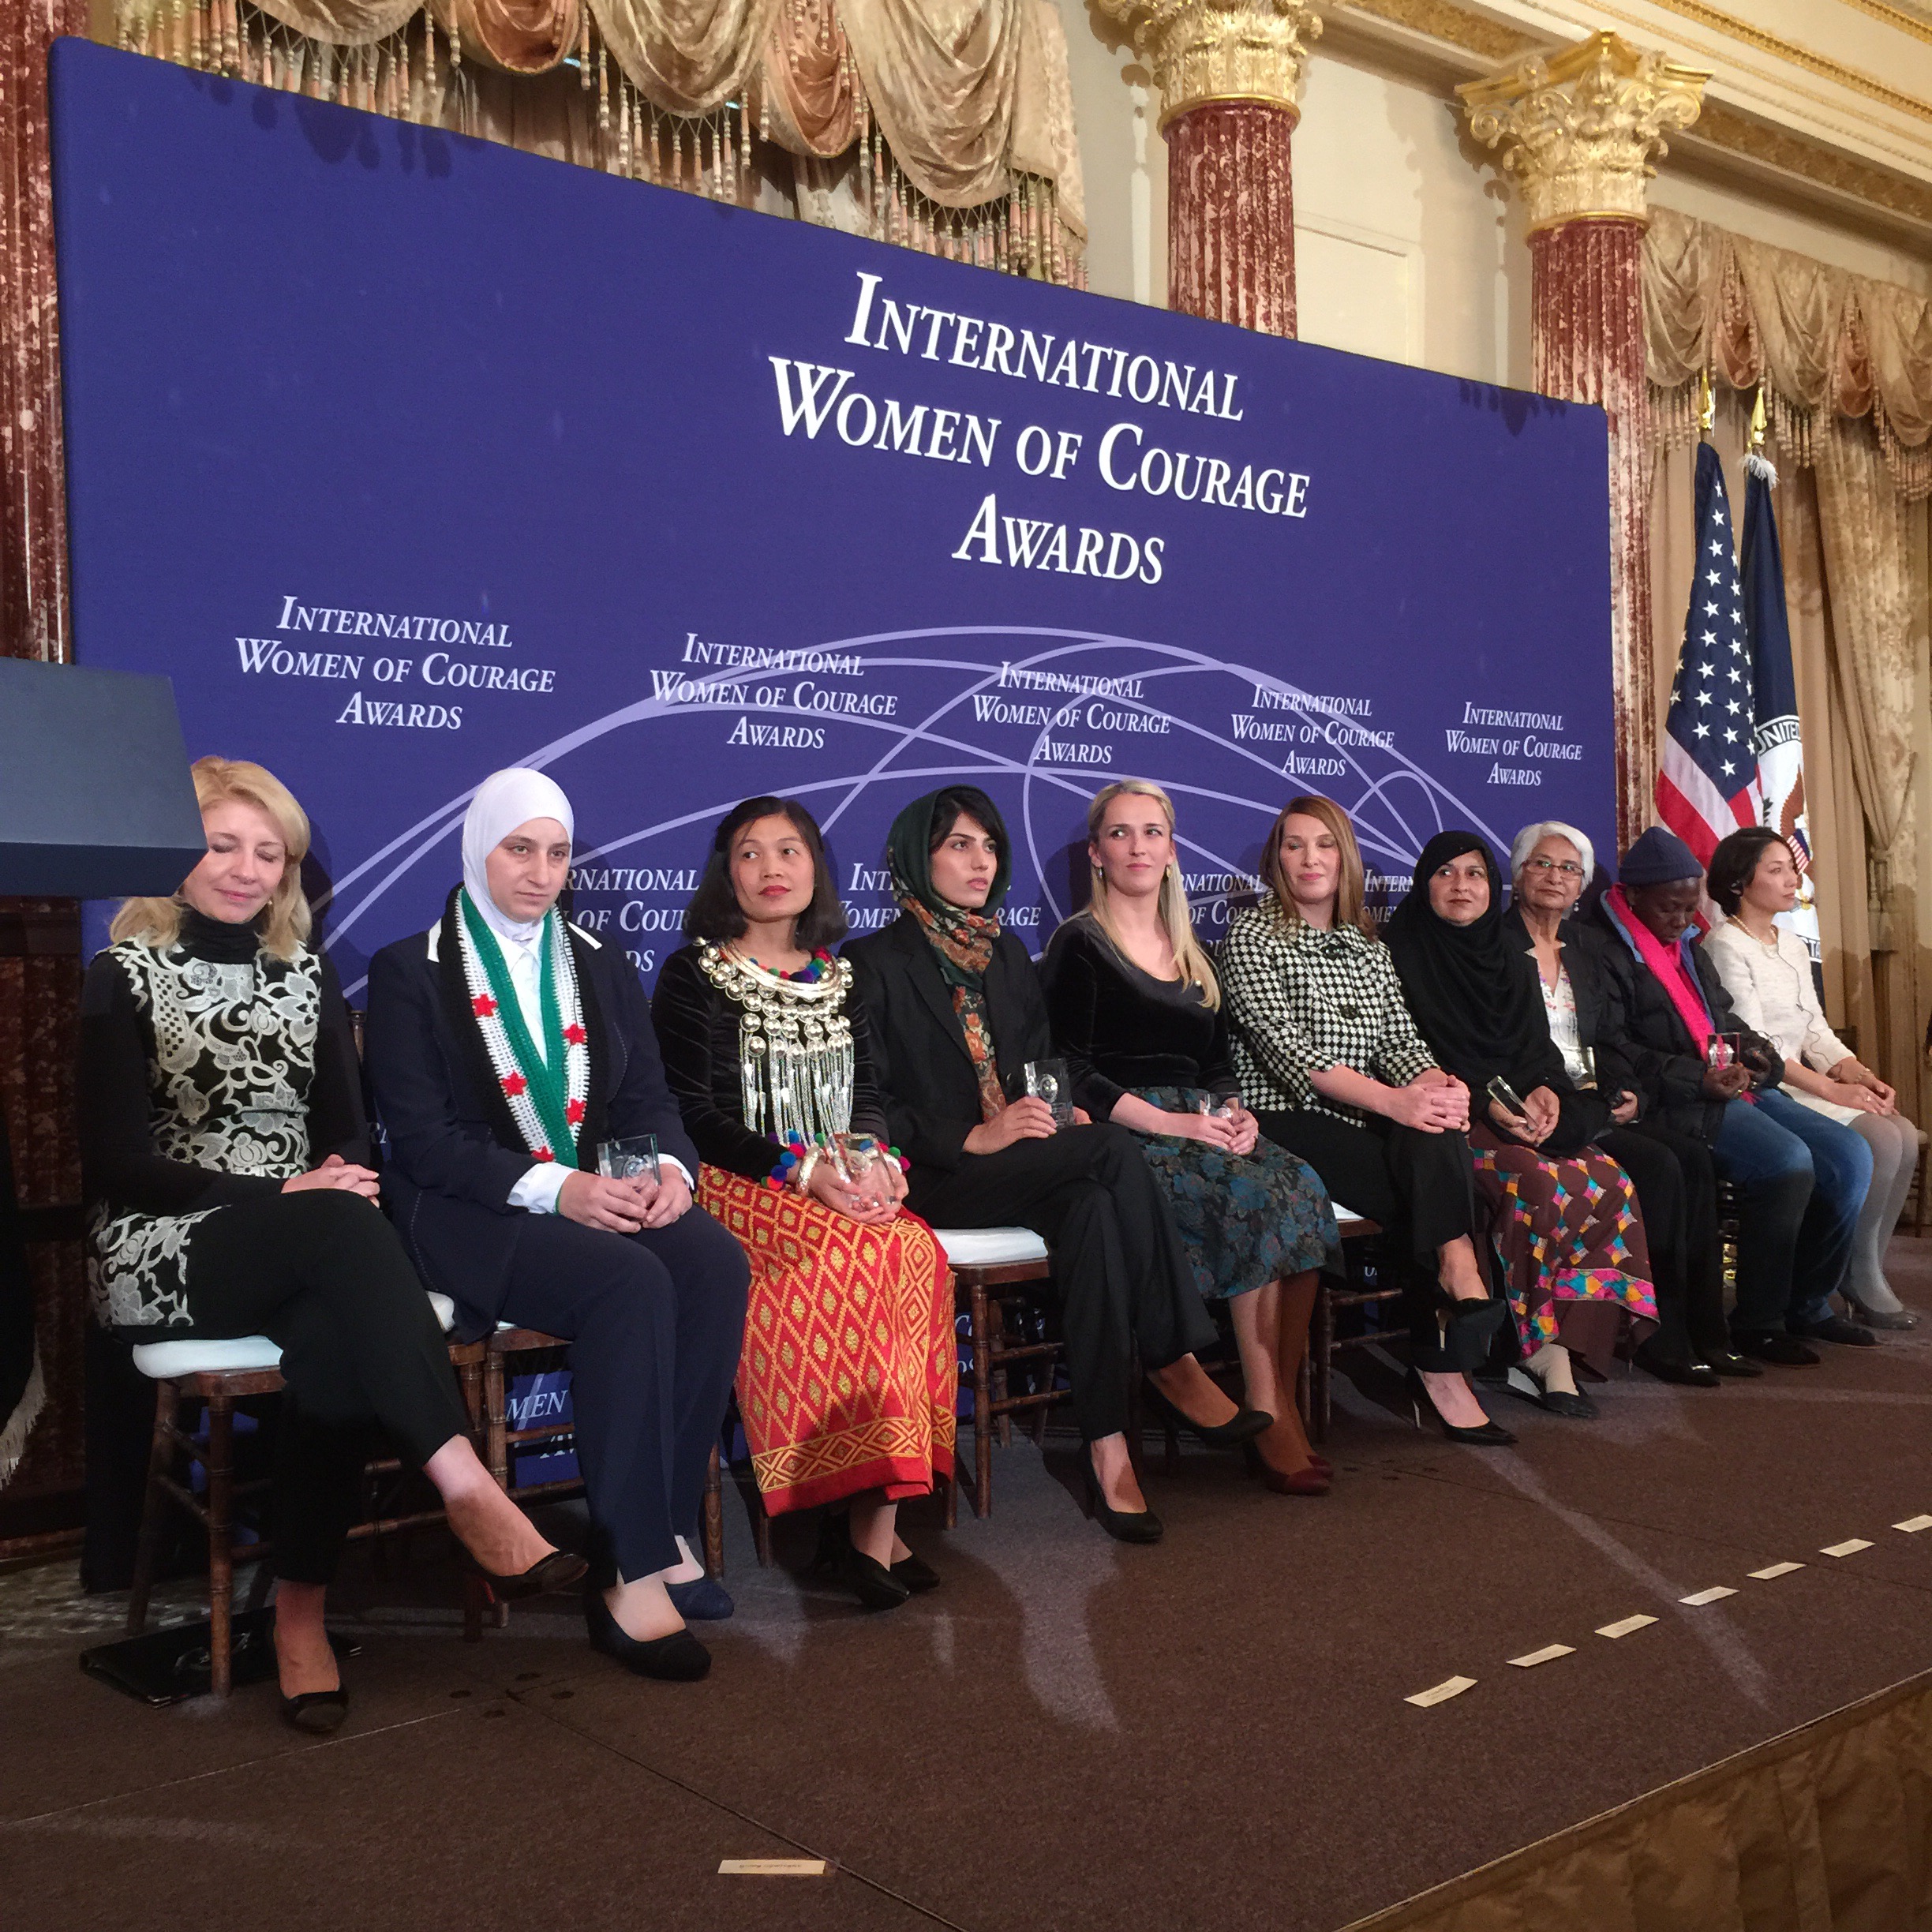 International Women of Courage Awards Celebrate Women’s History Month